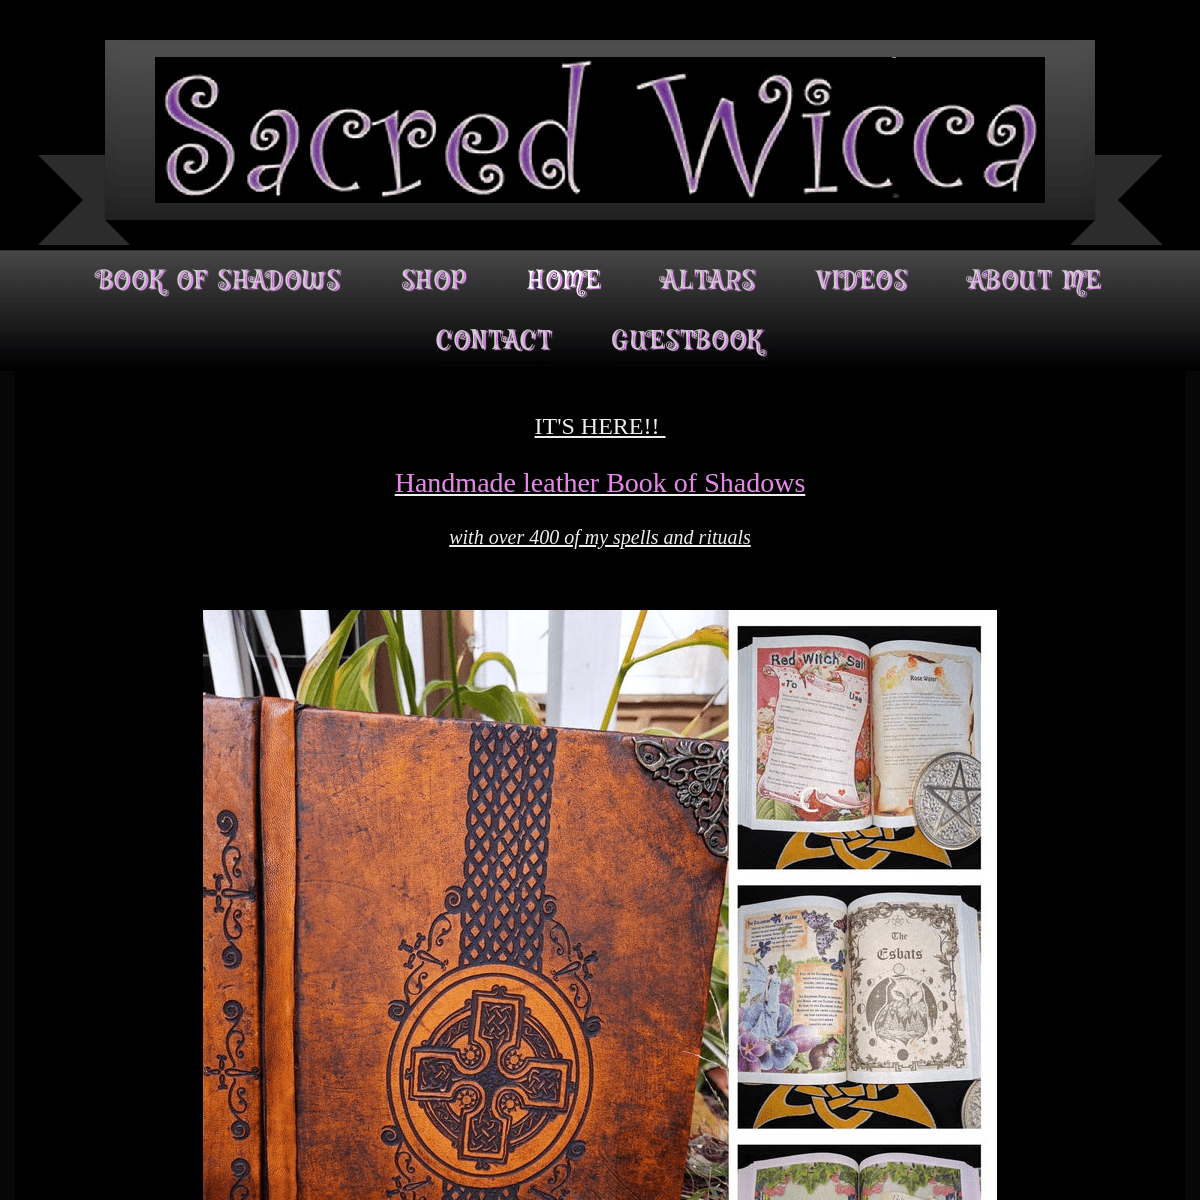 A complete backup of sacredwicca.com